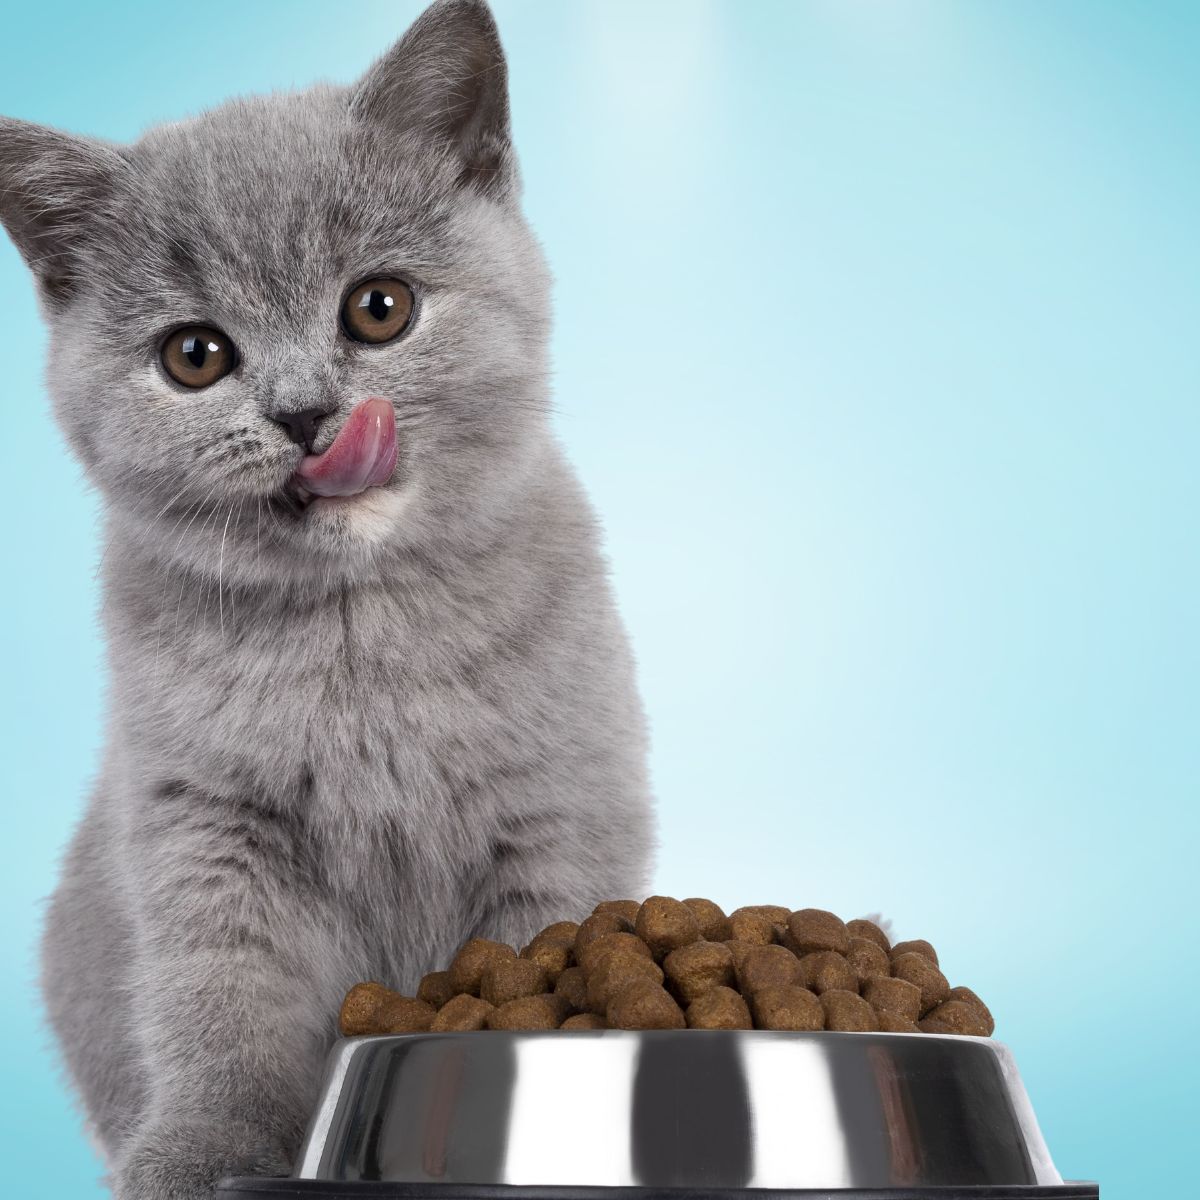 kitten eating food from bowl